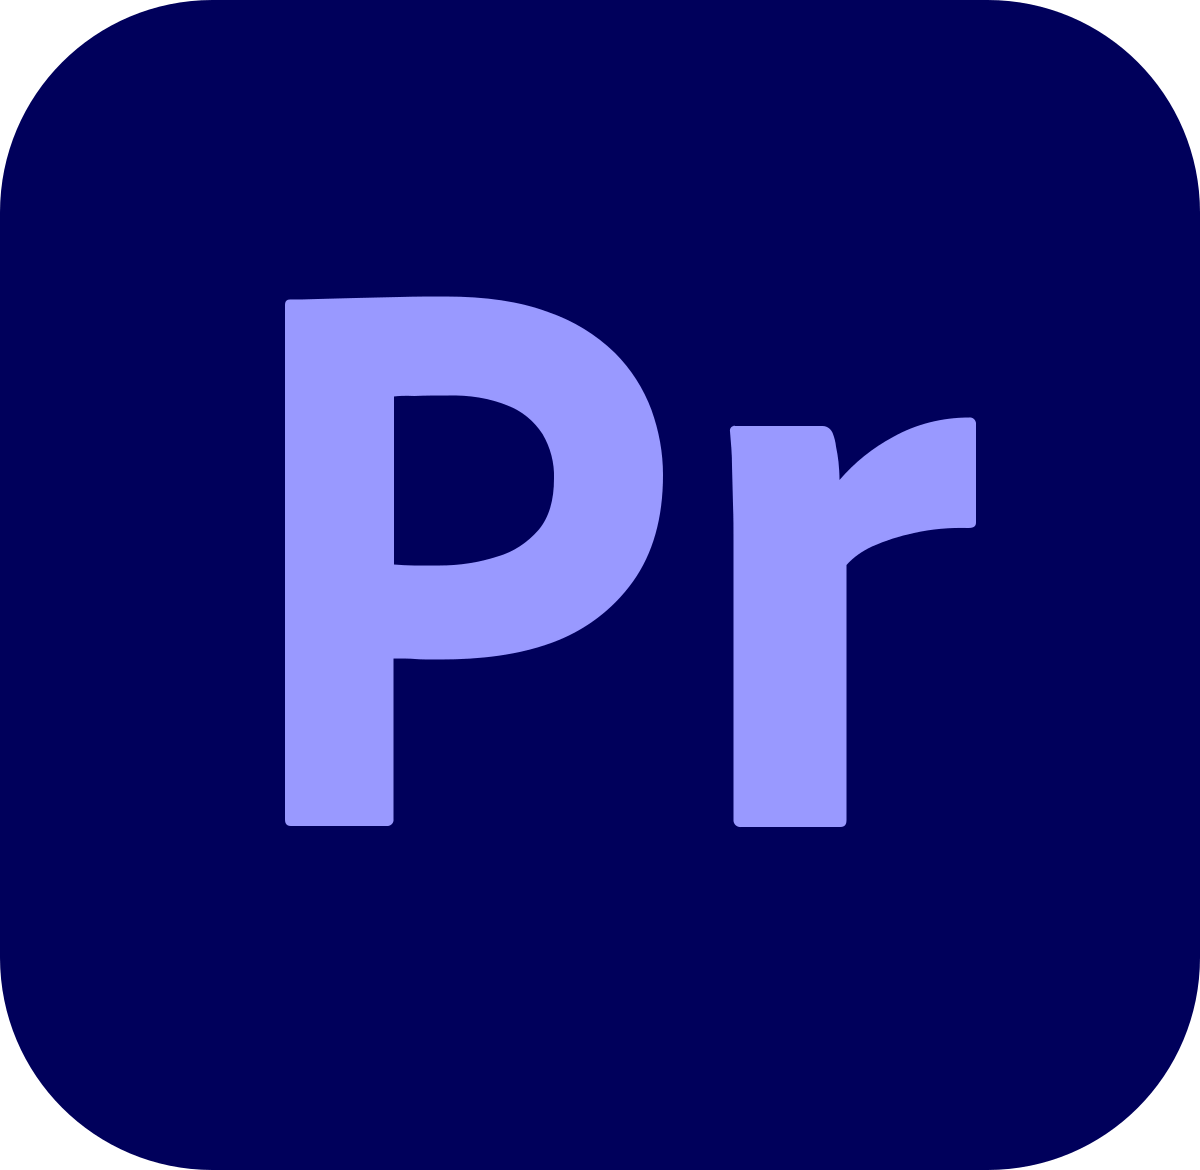 Adobe premiere pro cc icon. Svg | aio création